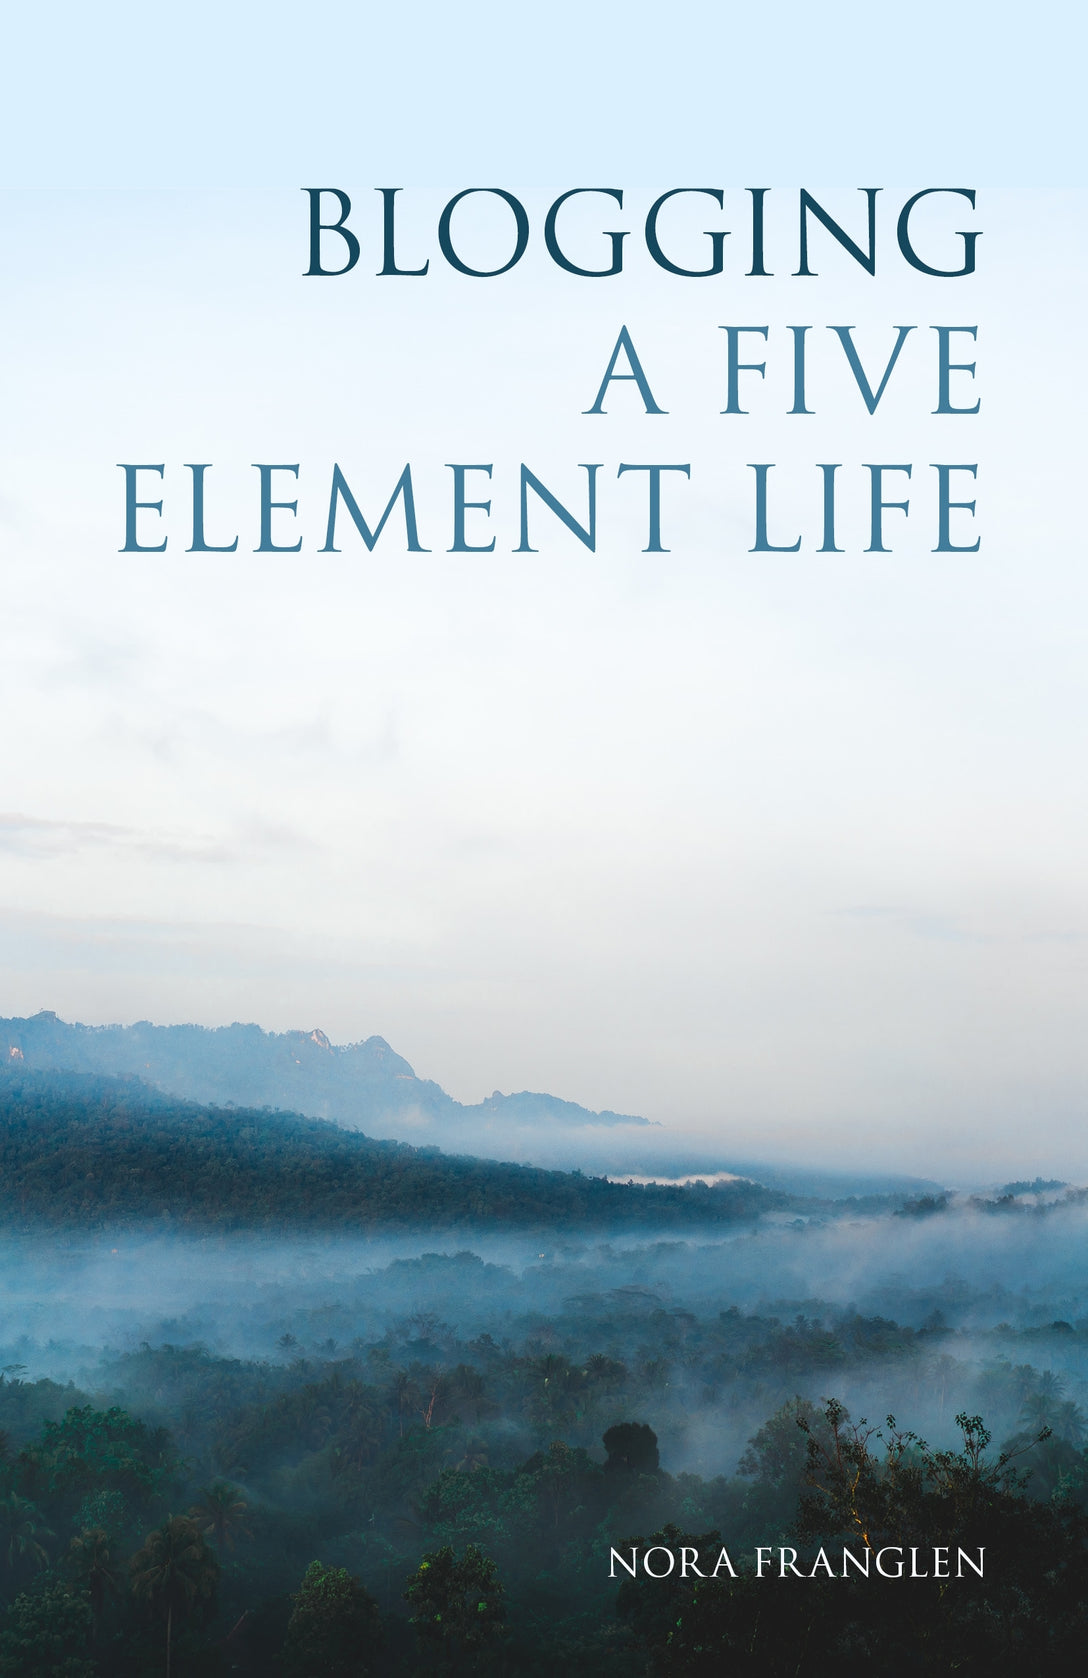 Blogging a Five Element Life by Nora Franglen